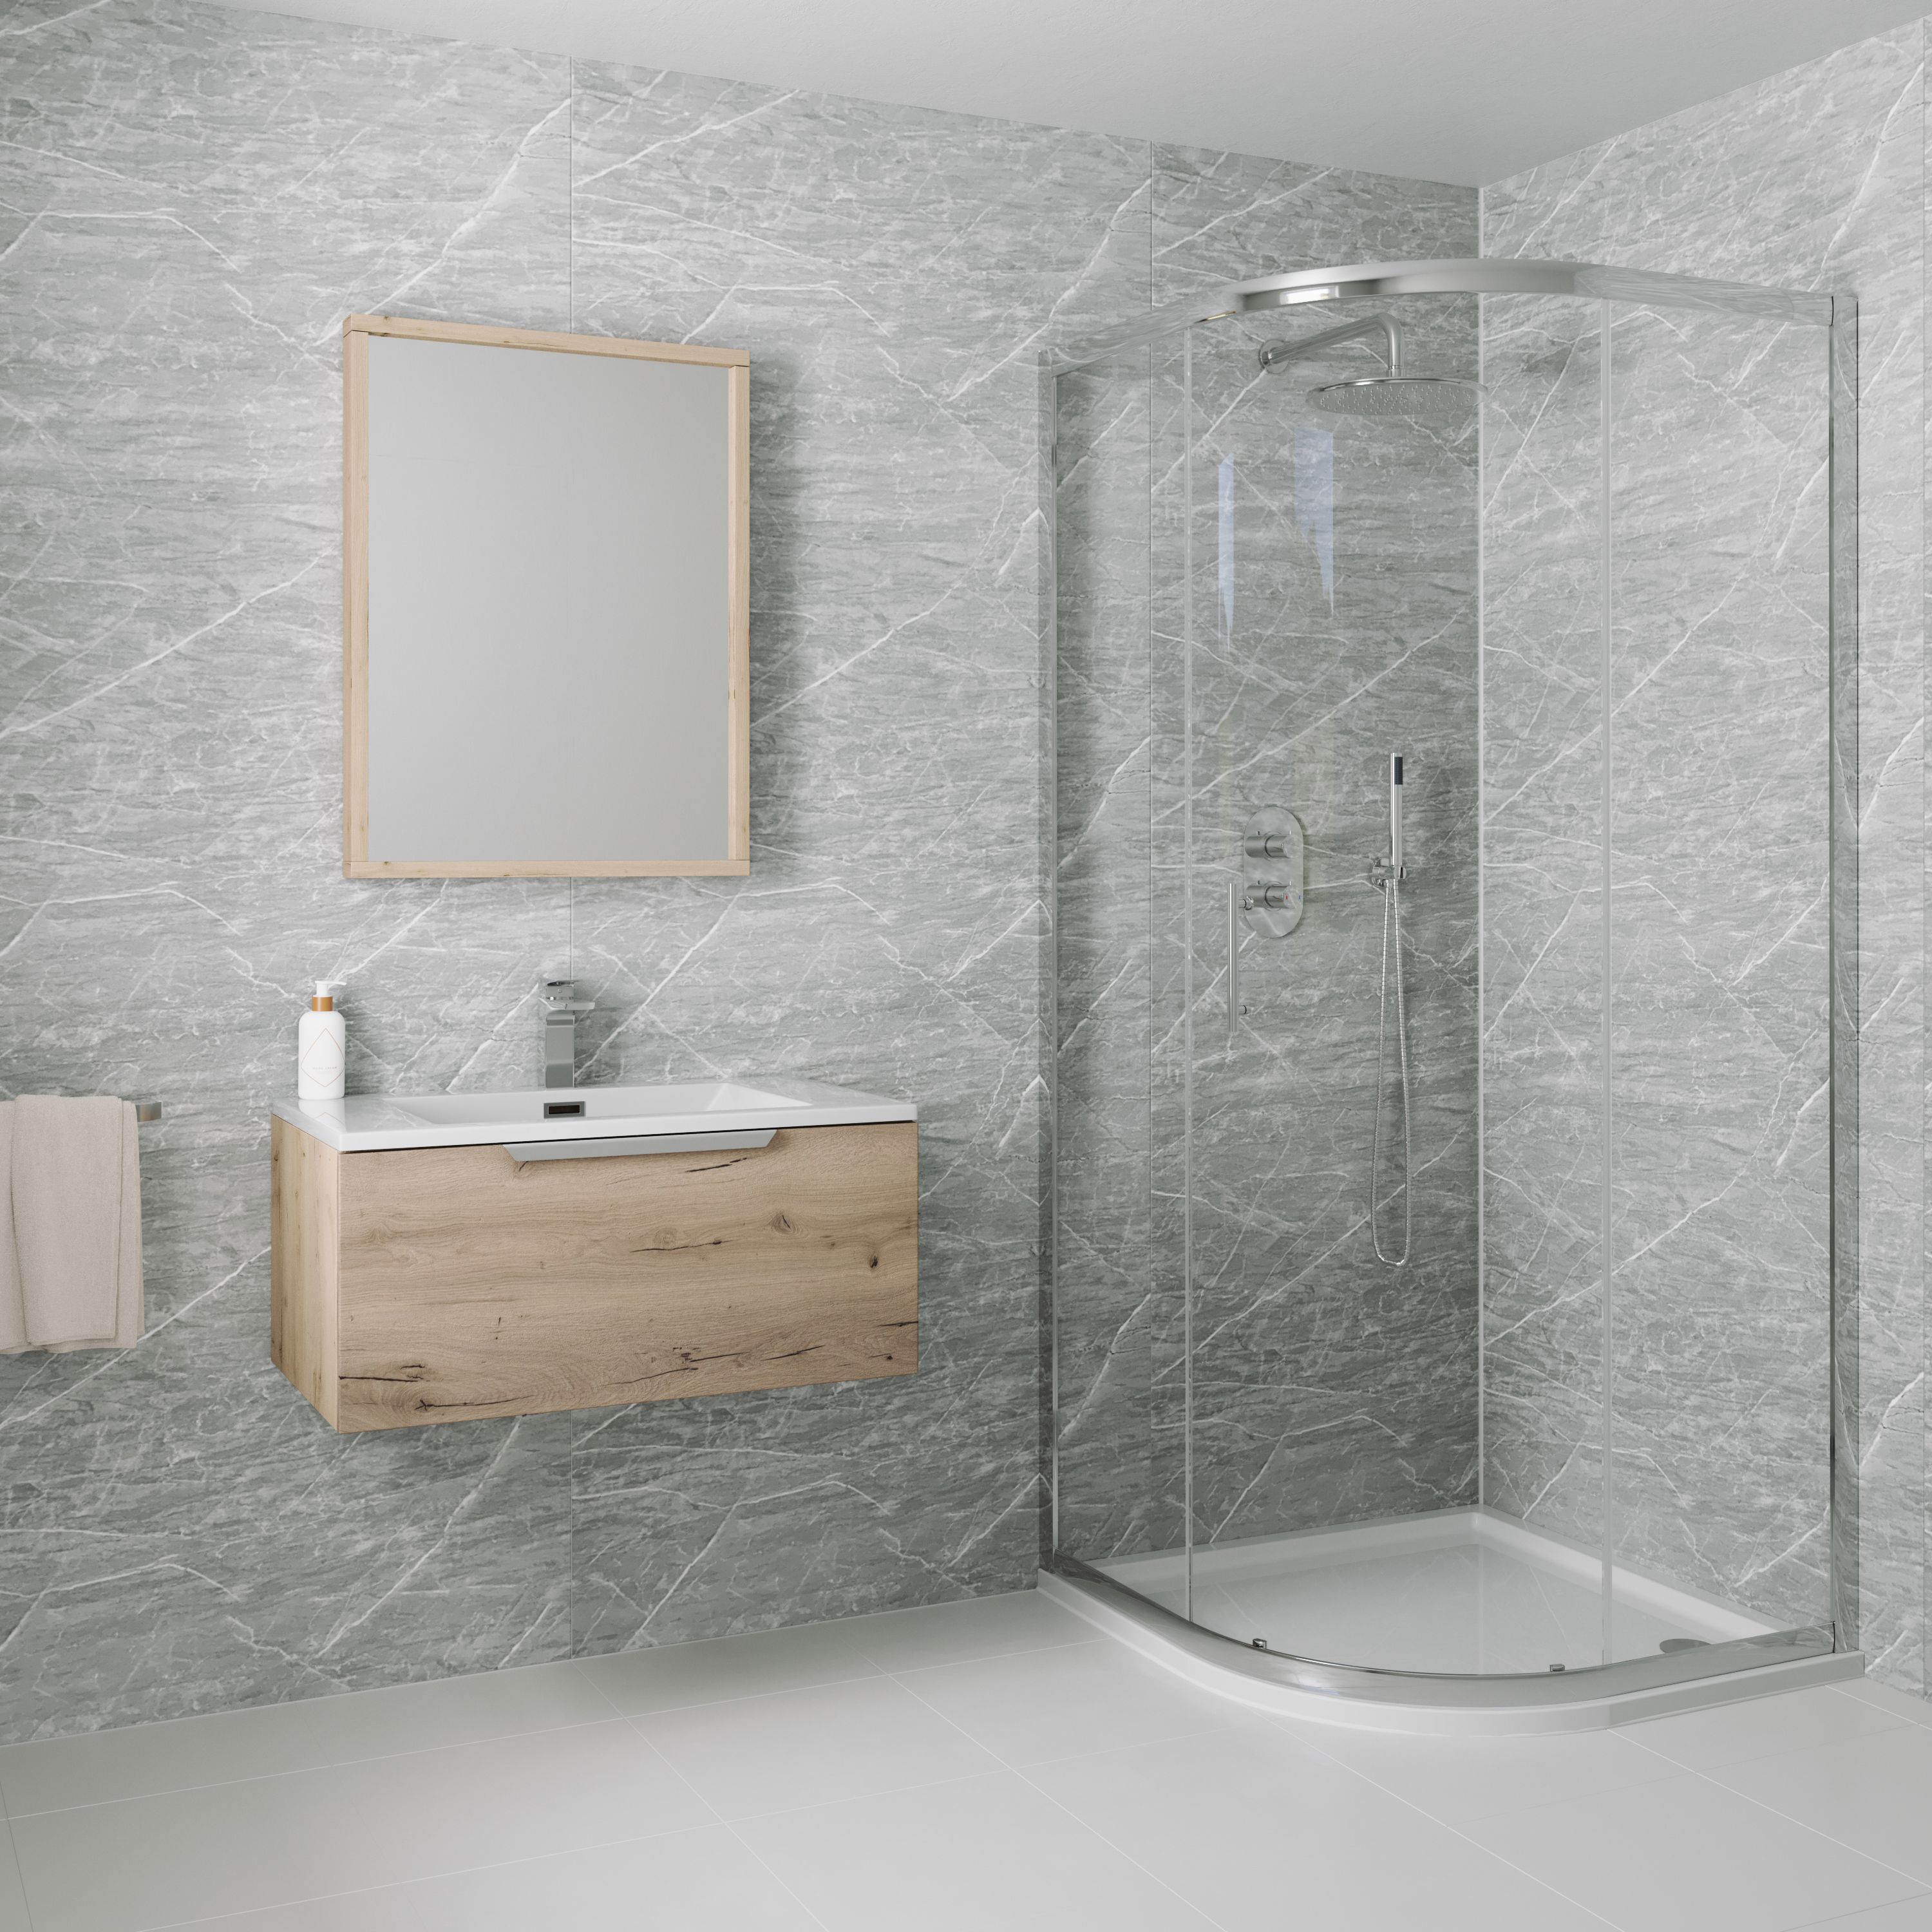 waterproof wall panels for bathrooms